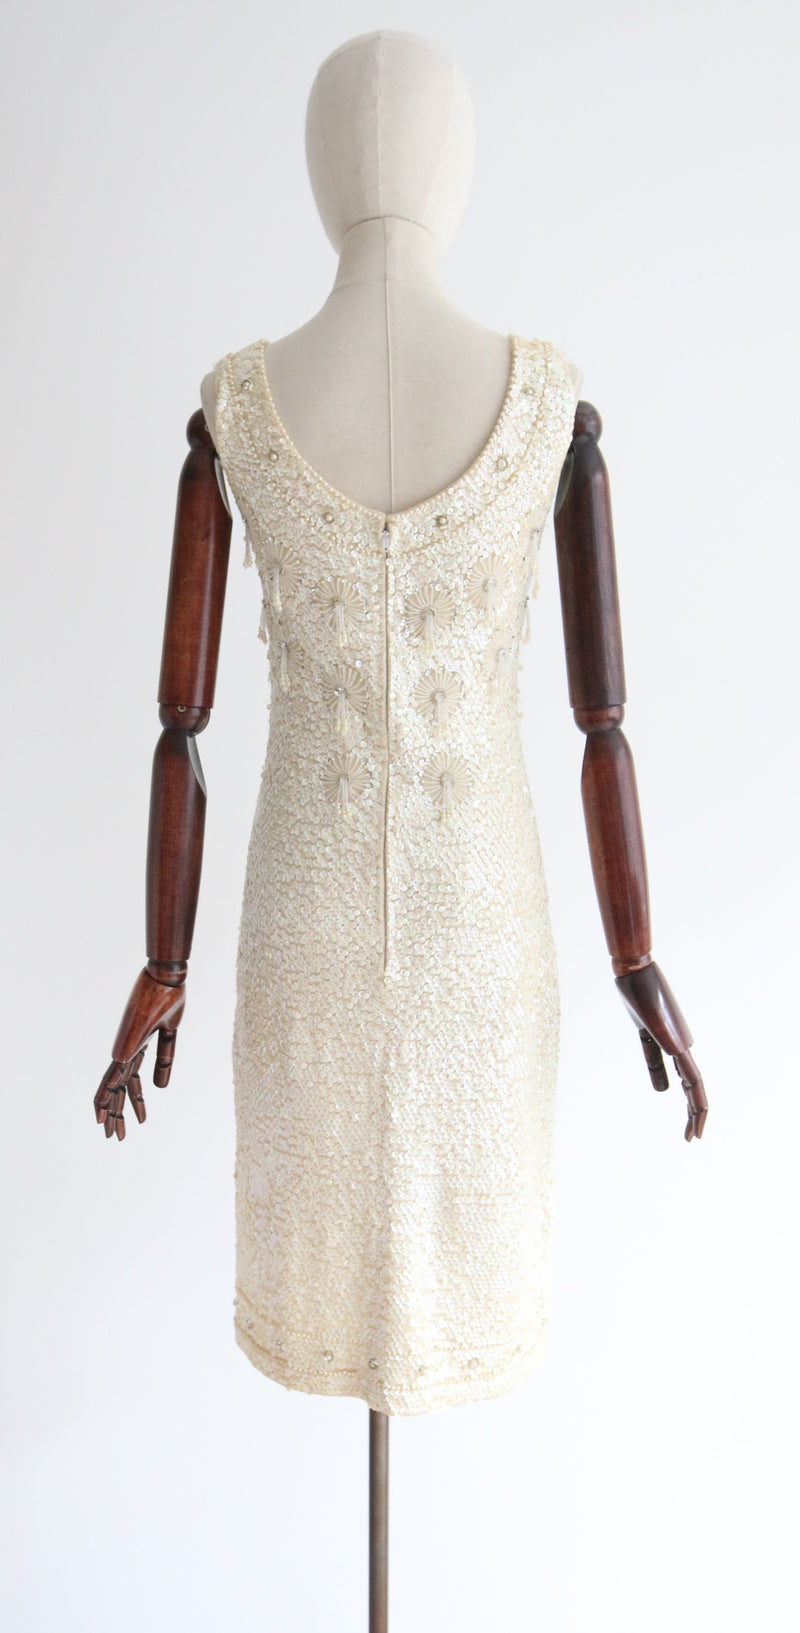 "Pearl Tassels & Sequins" Vintage 1960's Iridescent Cream Sequin & Beaded Wool Dress UK 8-10 US 4-6